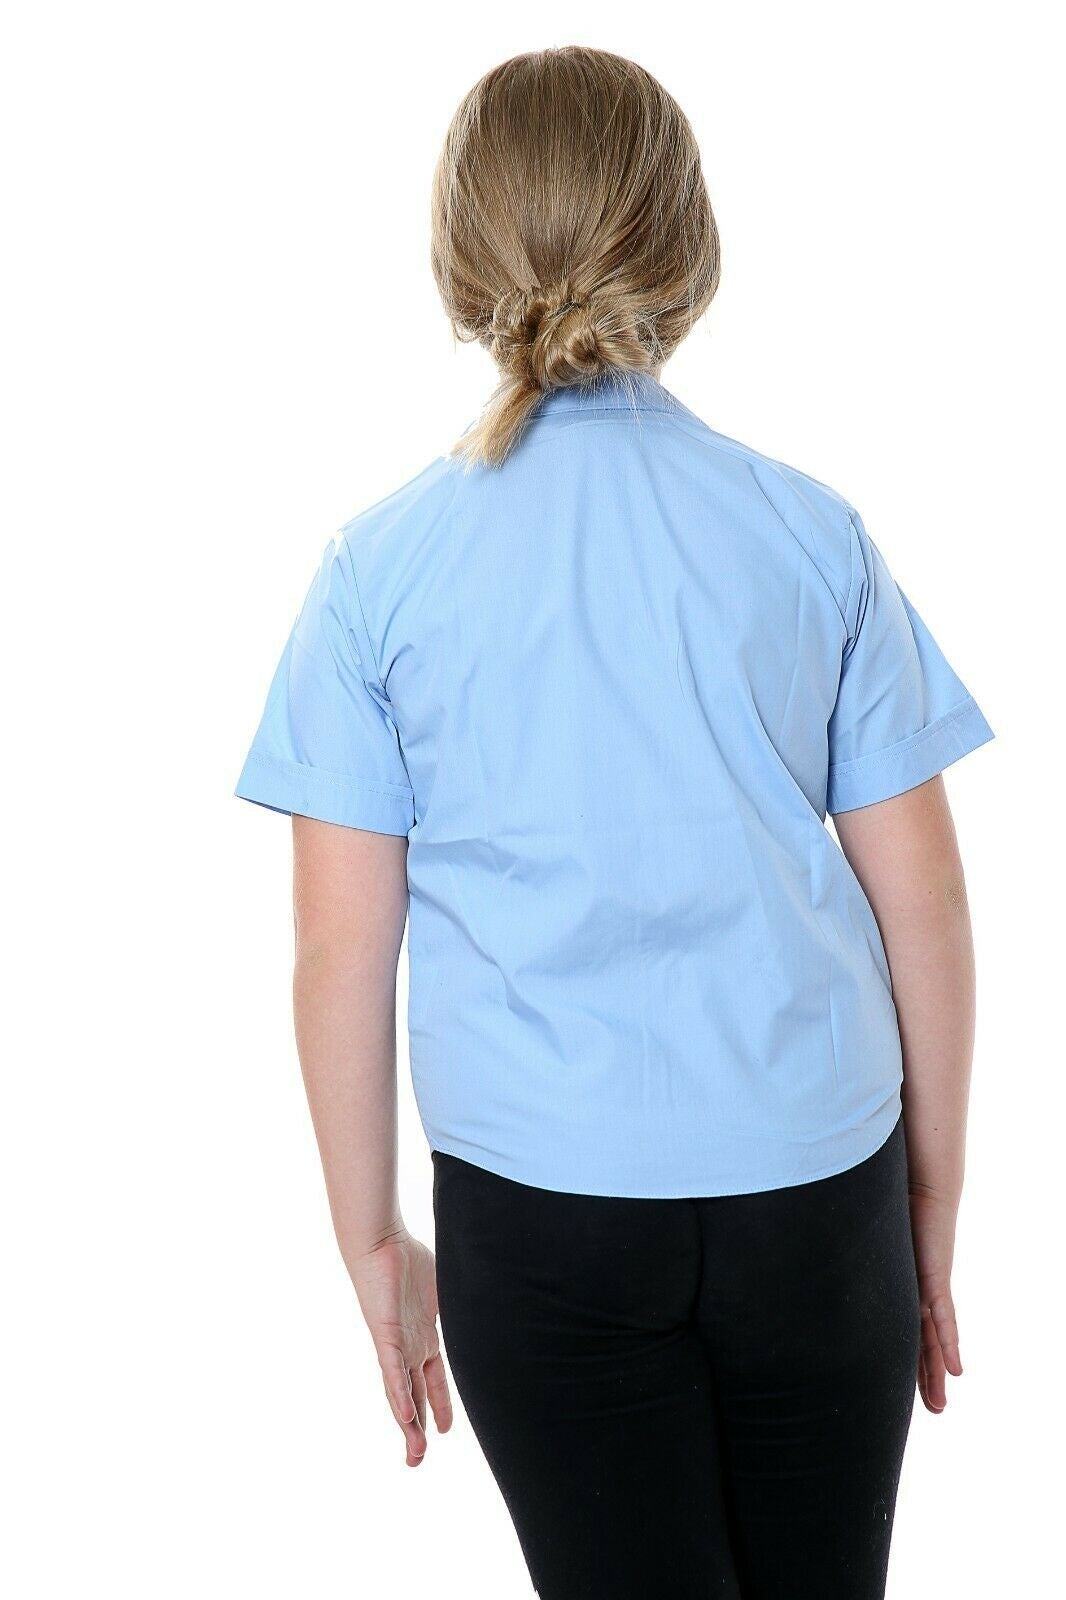 Kids Girls Poly Cotton Fabric Revere Collar Blouse School Uniform Shirts Blue Short Sleeve